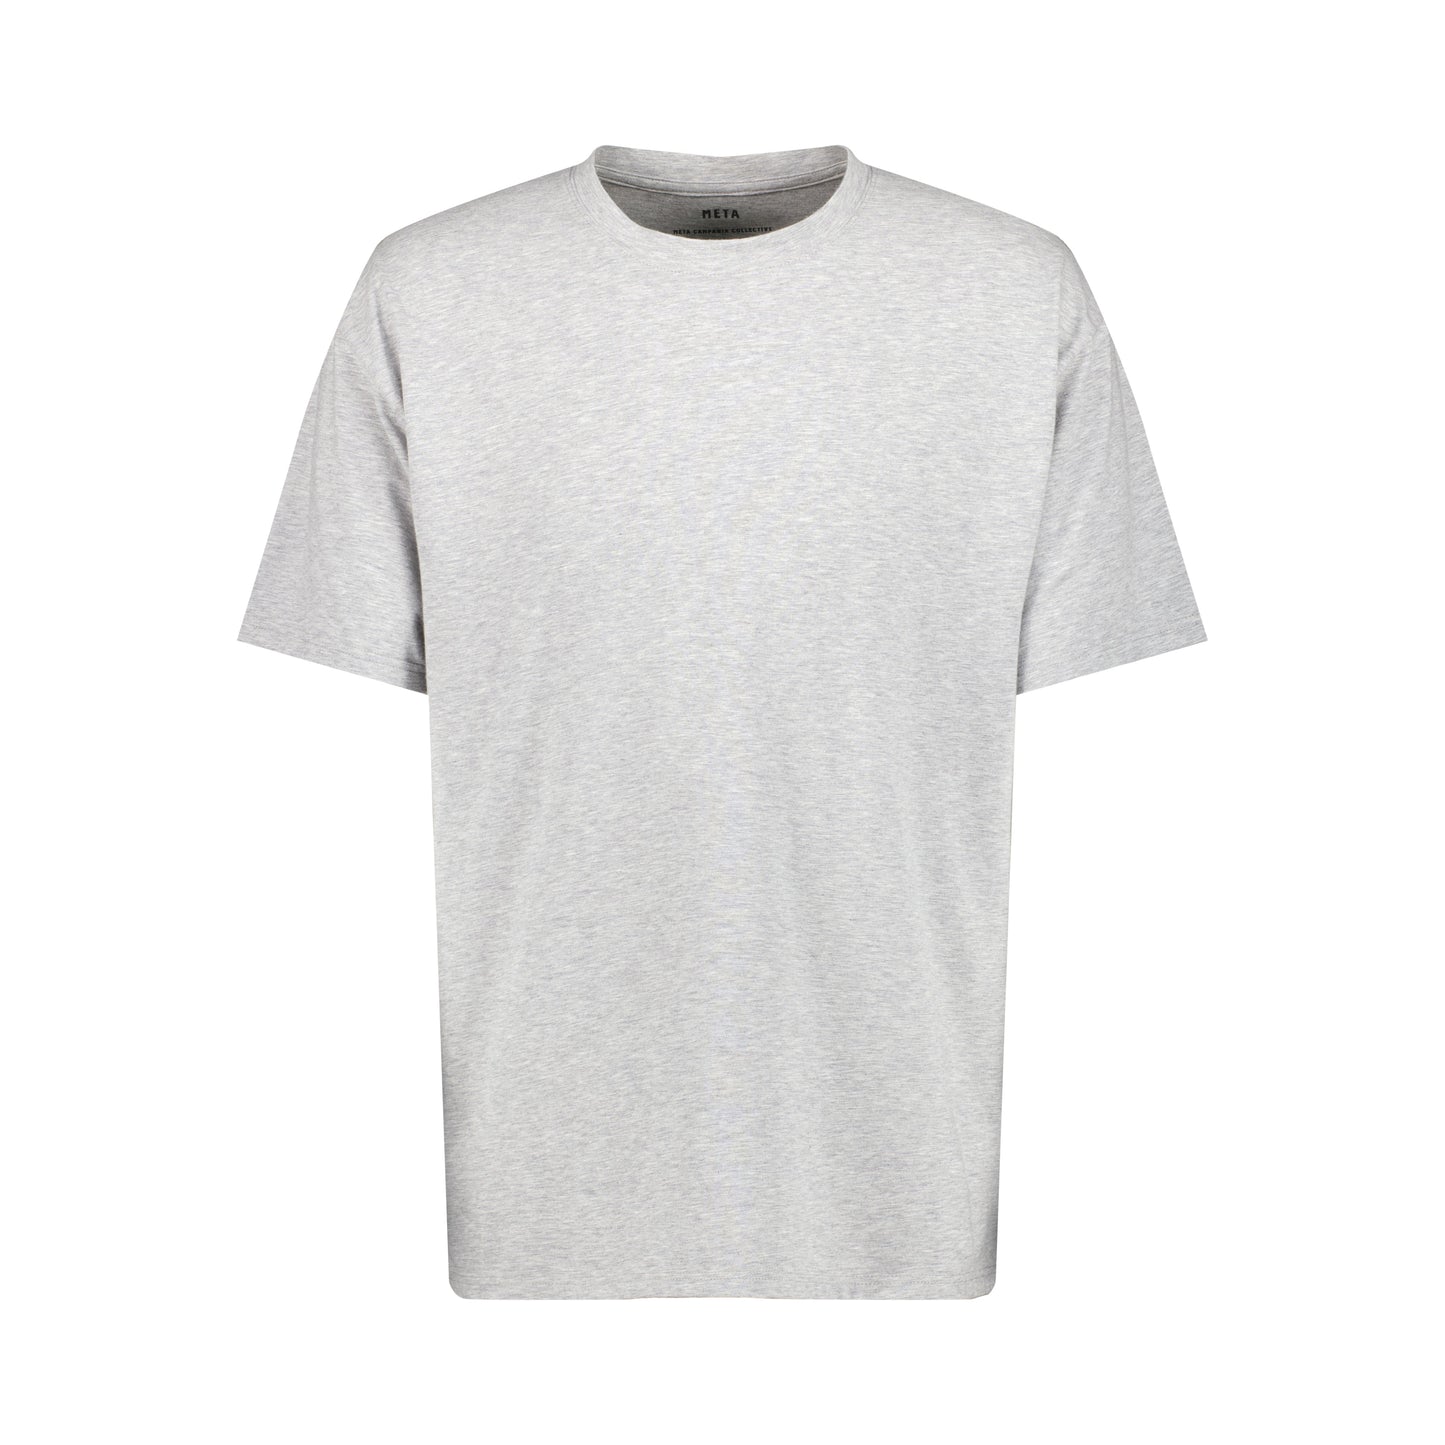 Peter Jersey Cotton T Shirt Grey Melange